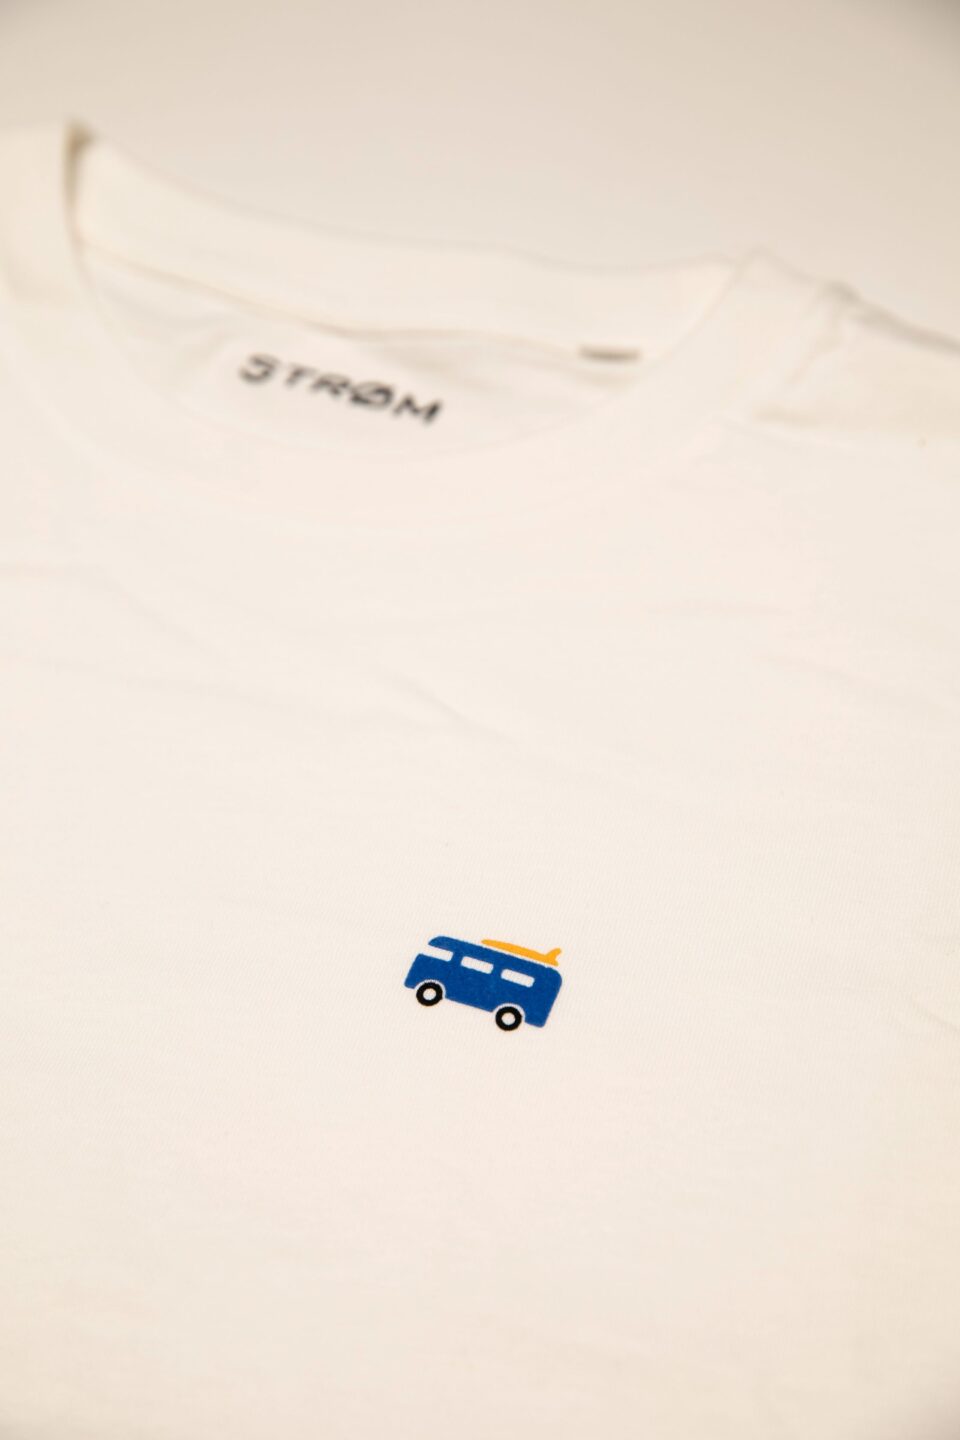 off white t-shirt - campervan